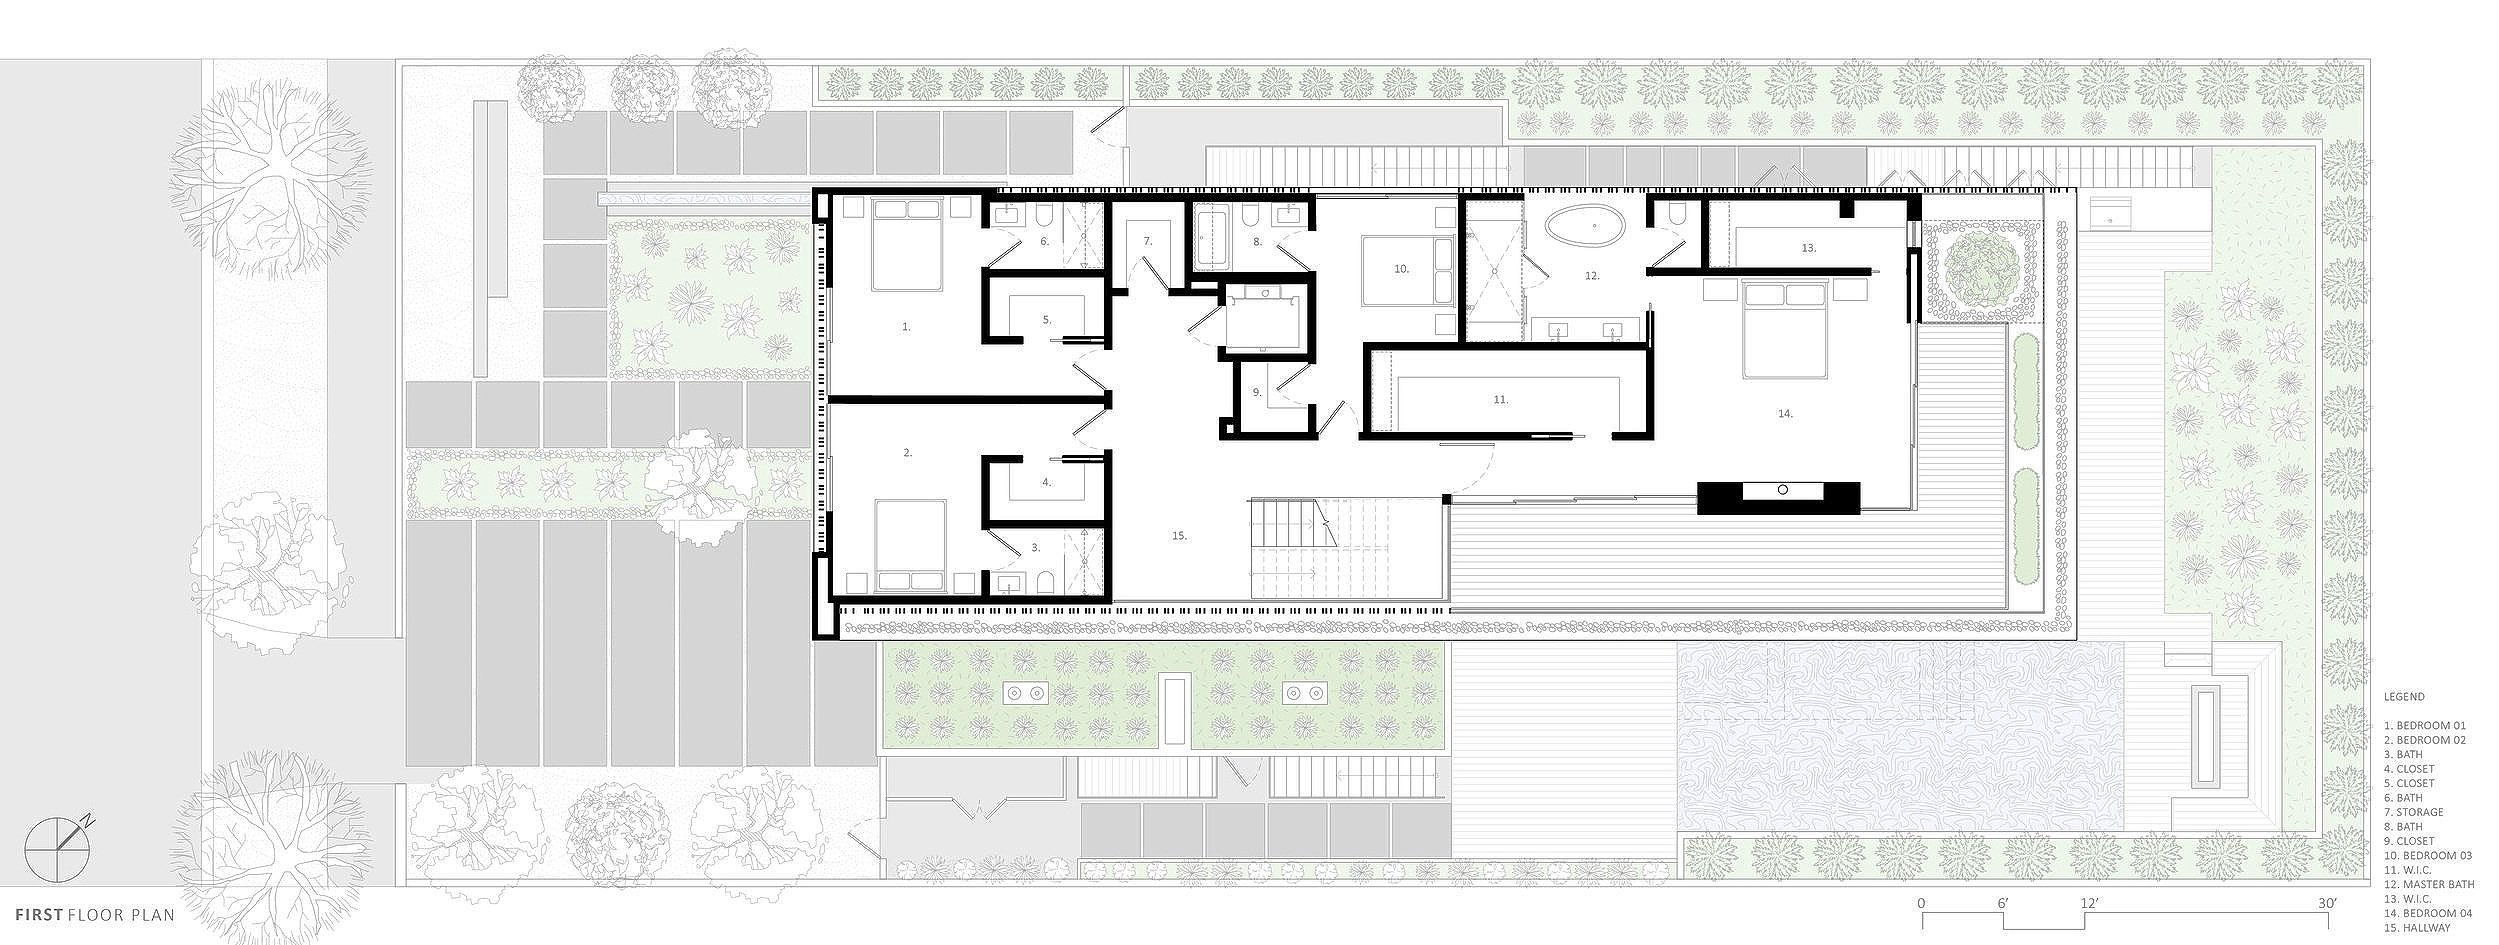 bspk-design-architecture-california-7700-residenital-fin-house-first+floor+plan.jpg